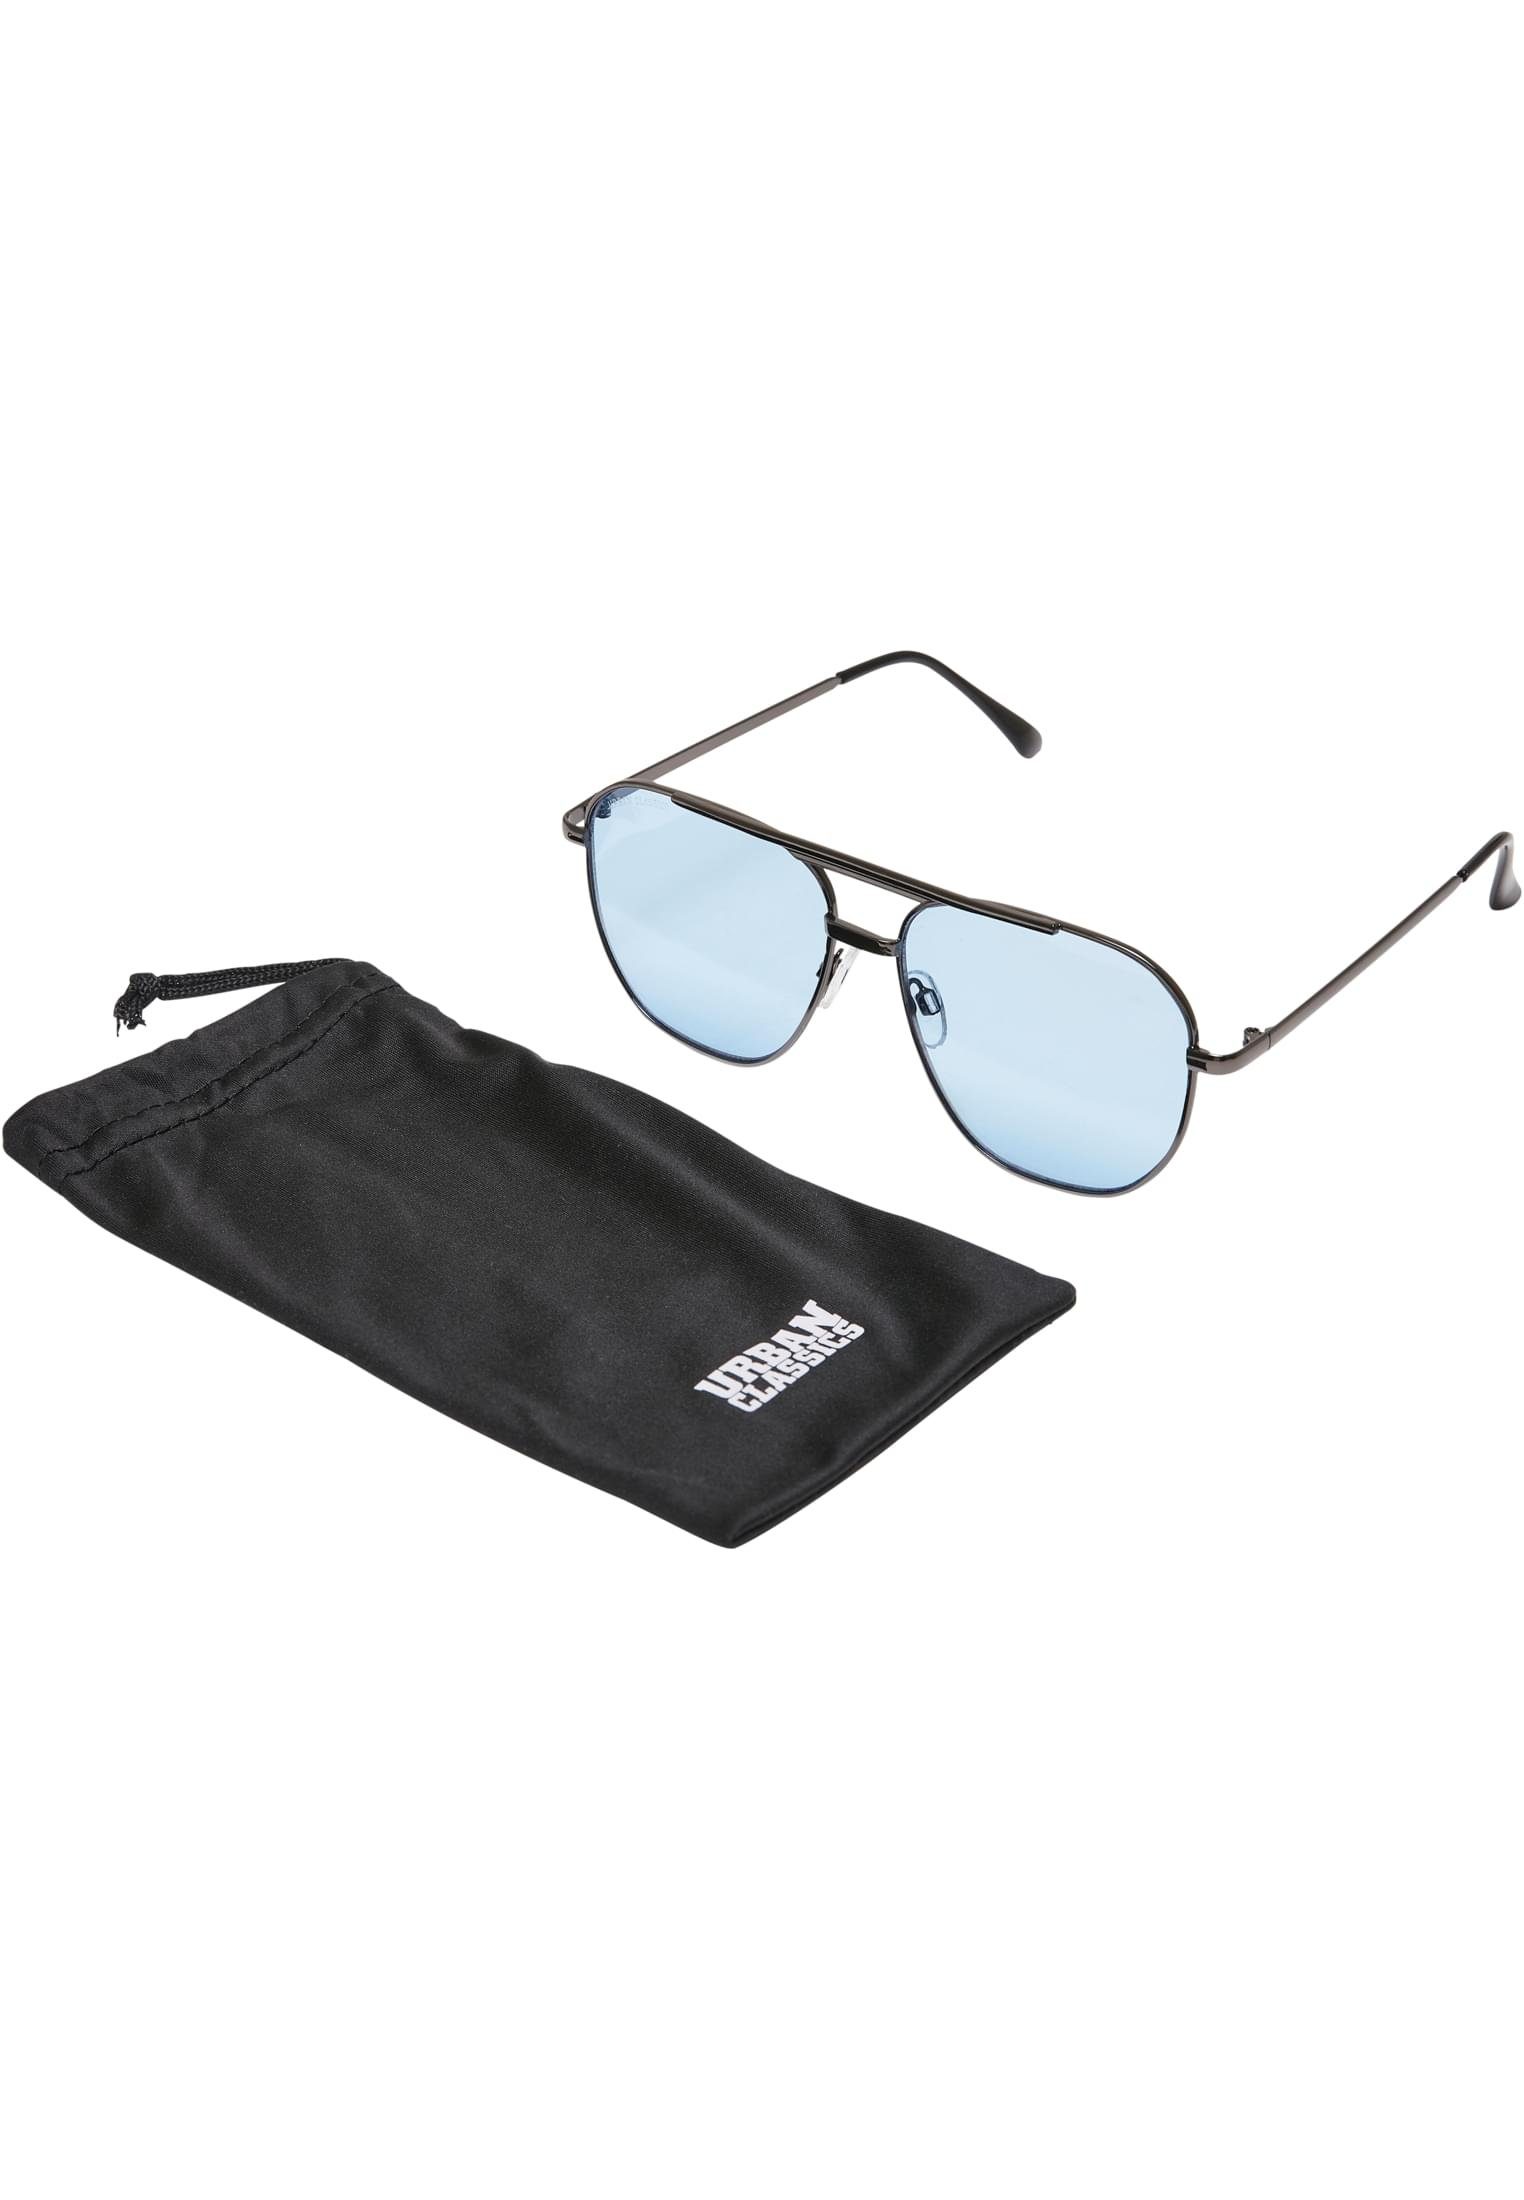 URBAN Sunglasses gunmetal/batikblue Sonnenbrille Unisex Manila CLASSICS